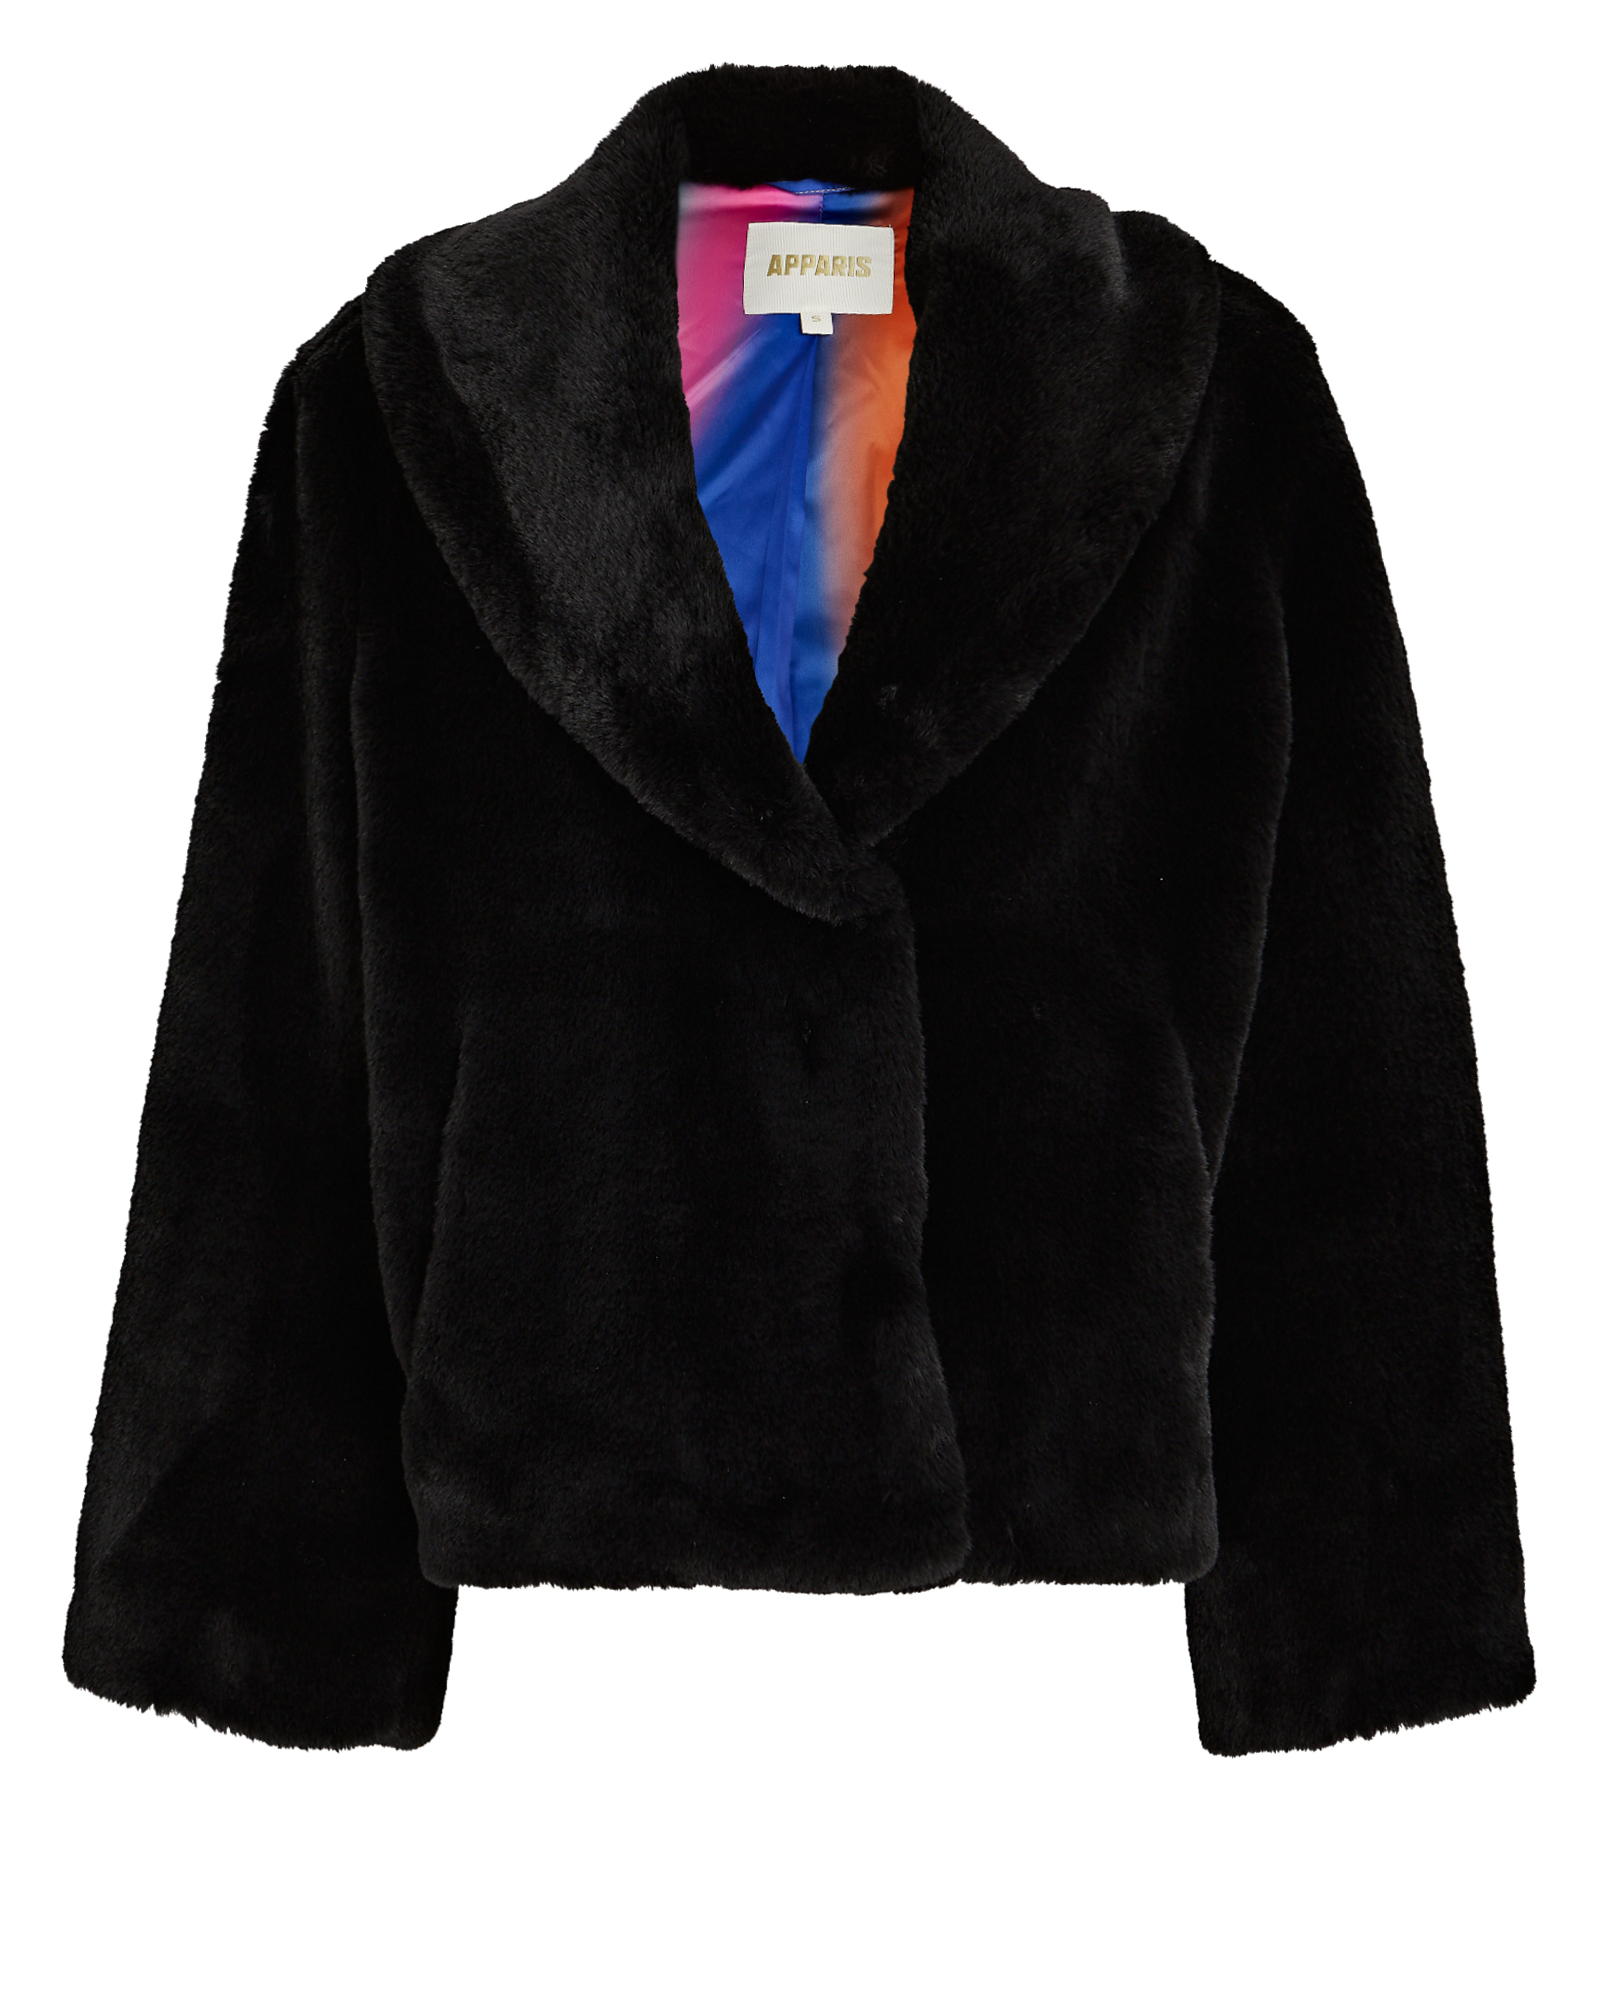 Apparis Fiona Koba Faux Fur Coat | INTERMIX®